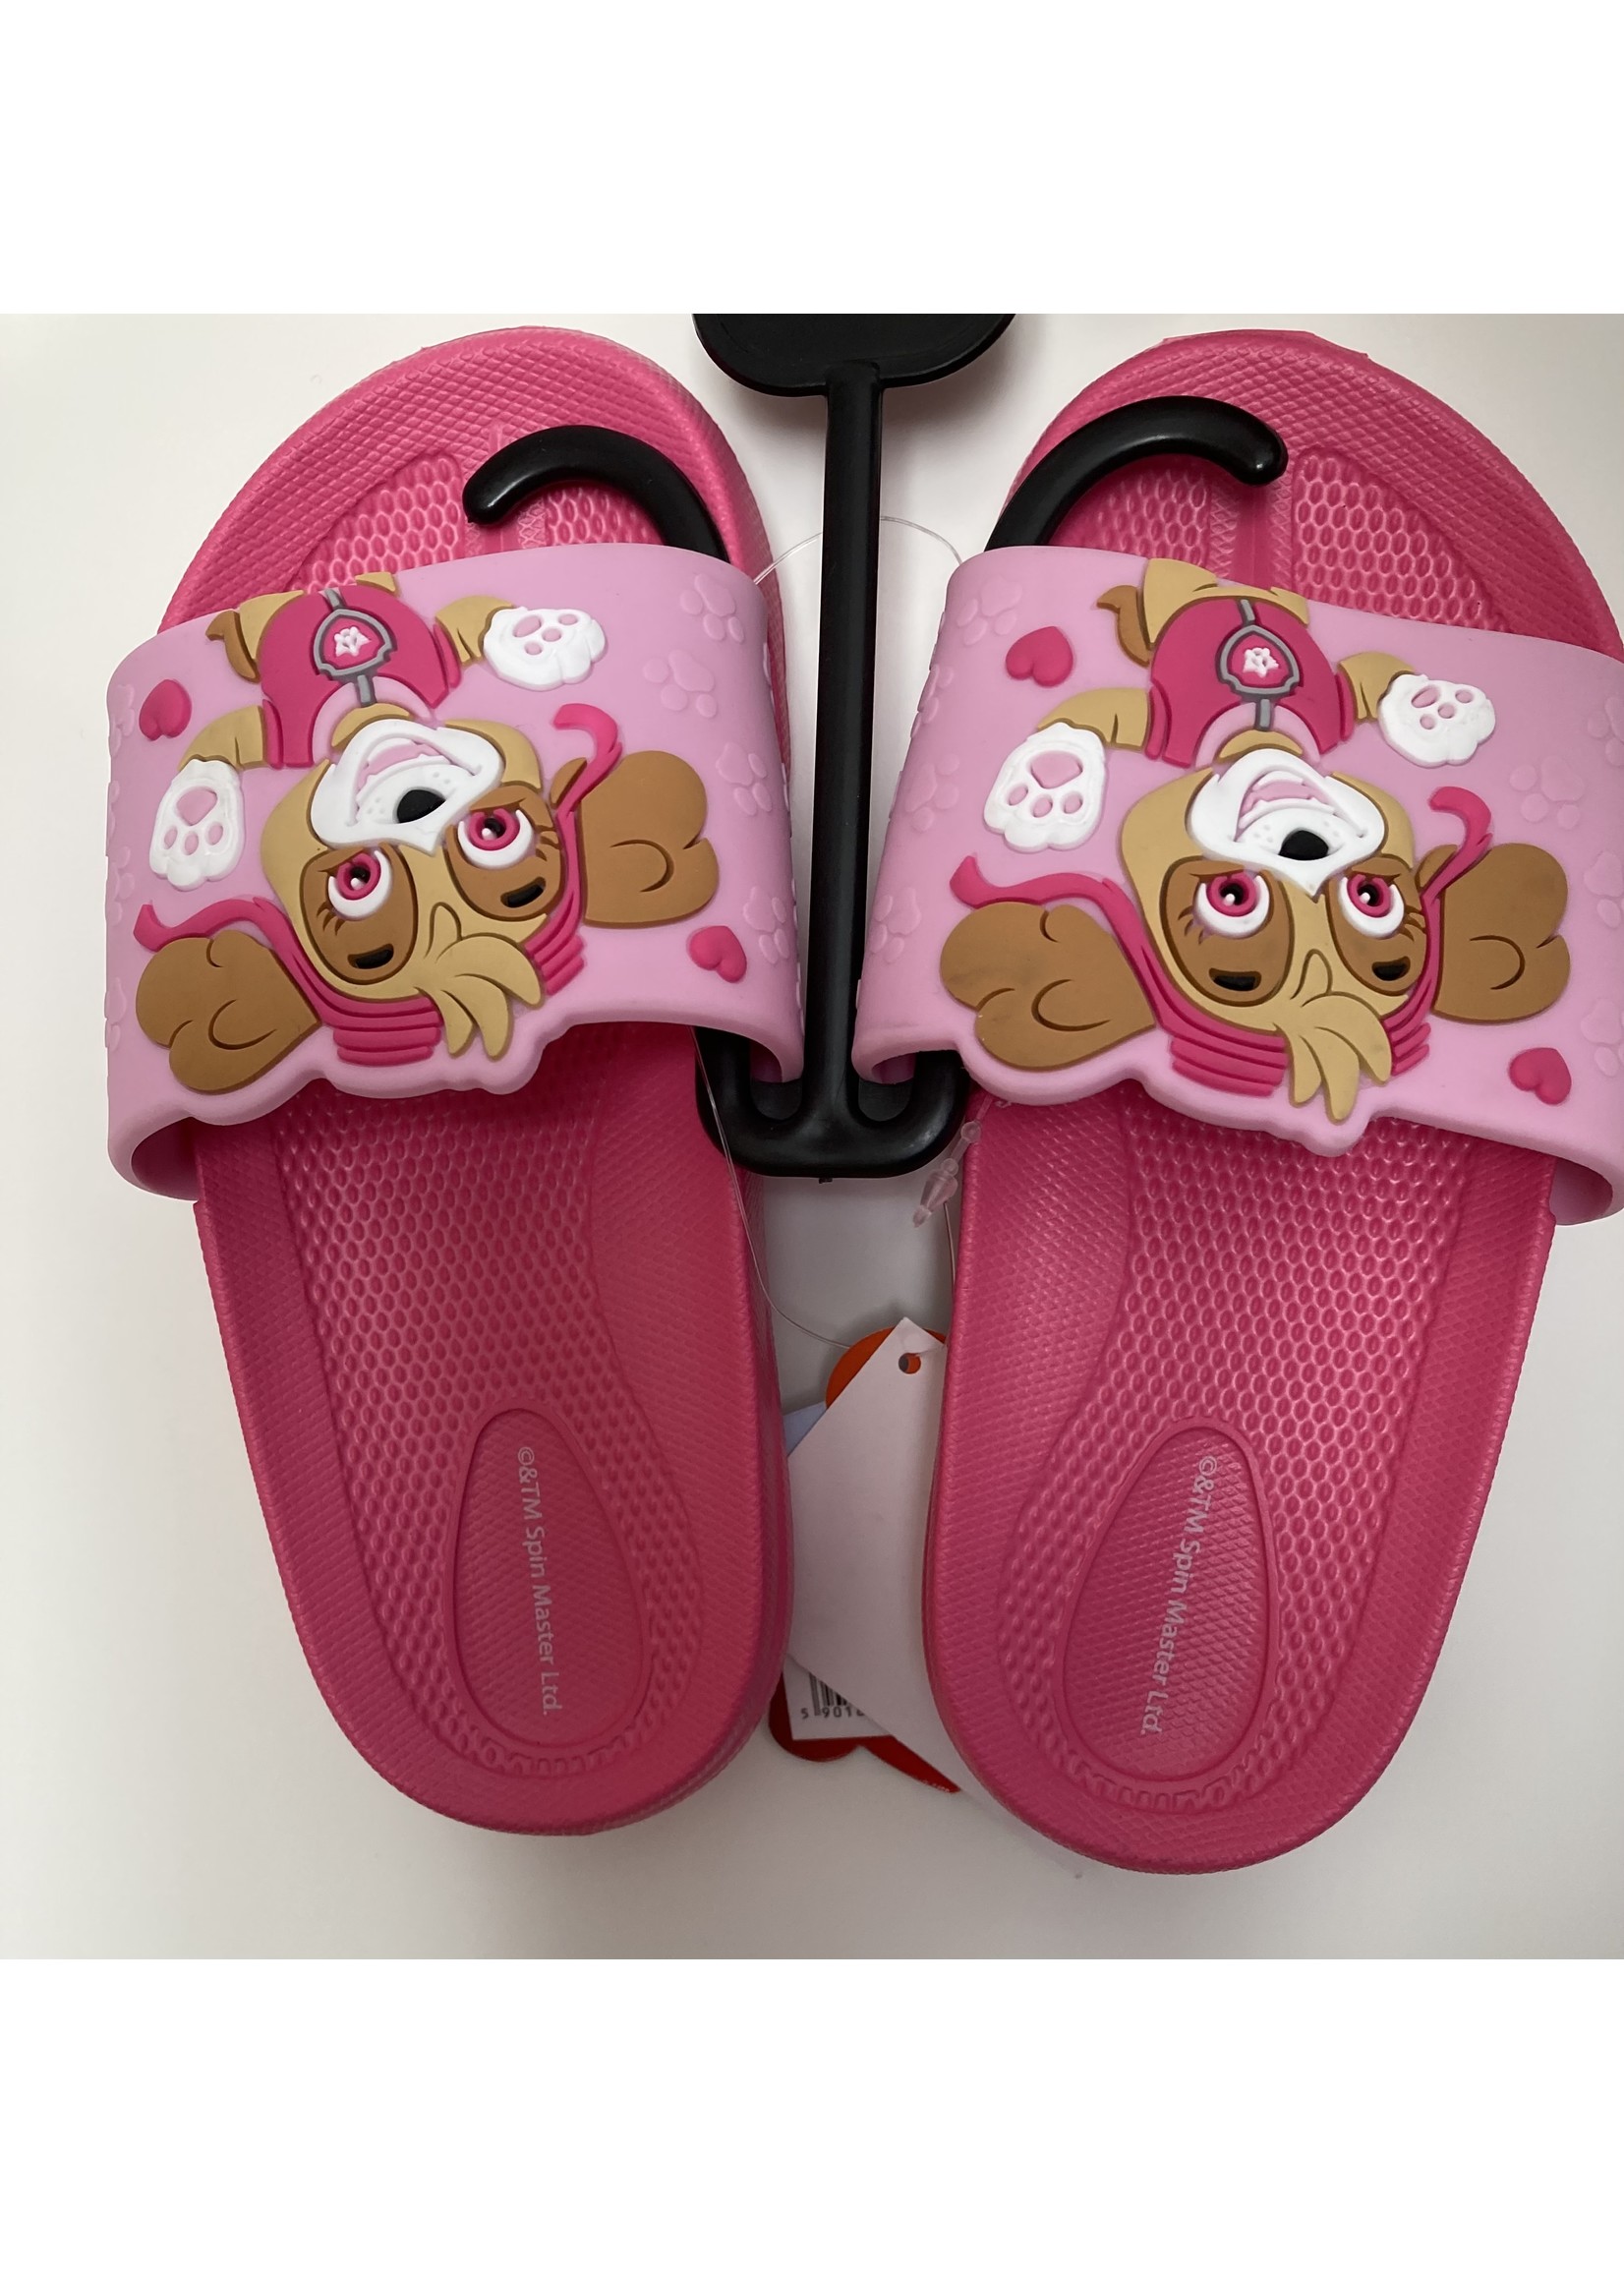 Nickelodeon Paw Patrol bath slippers from Nickelodeon pink